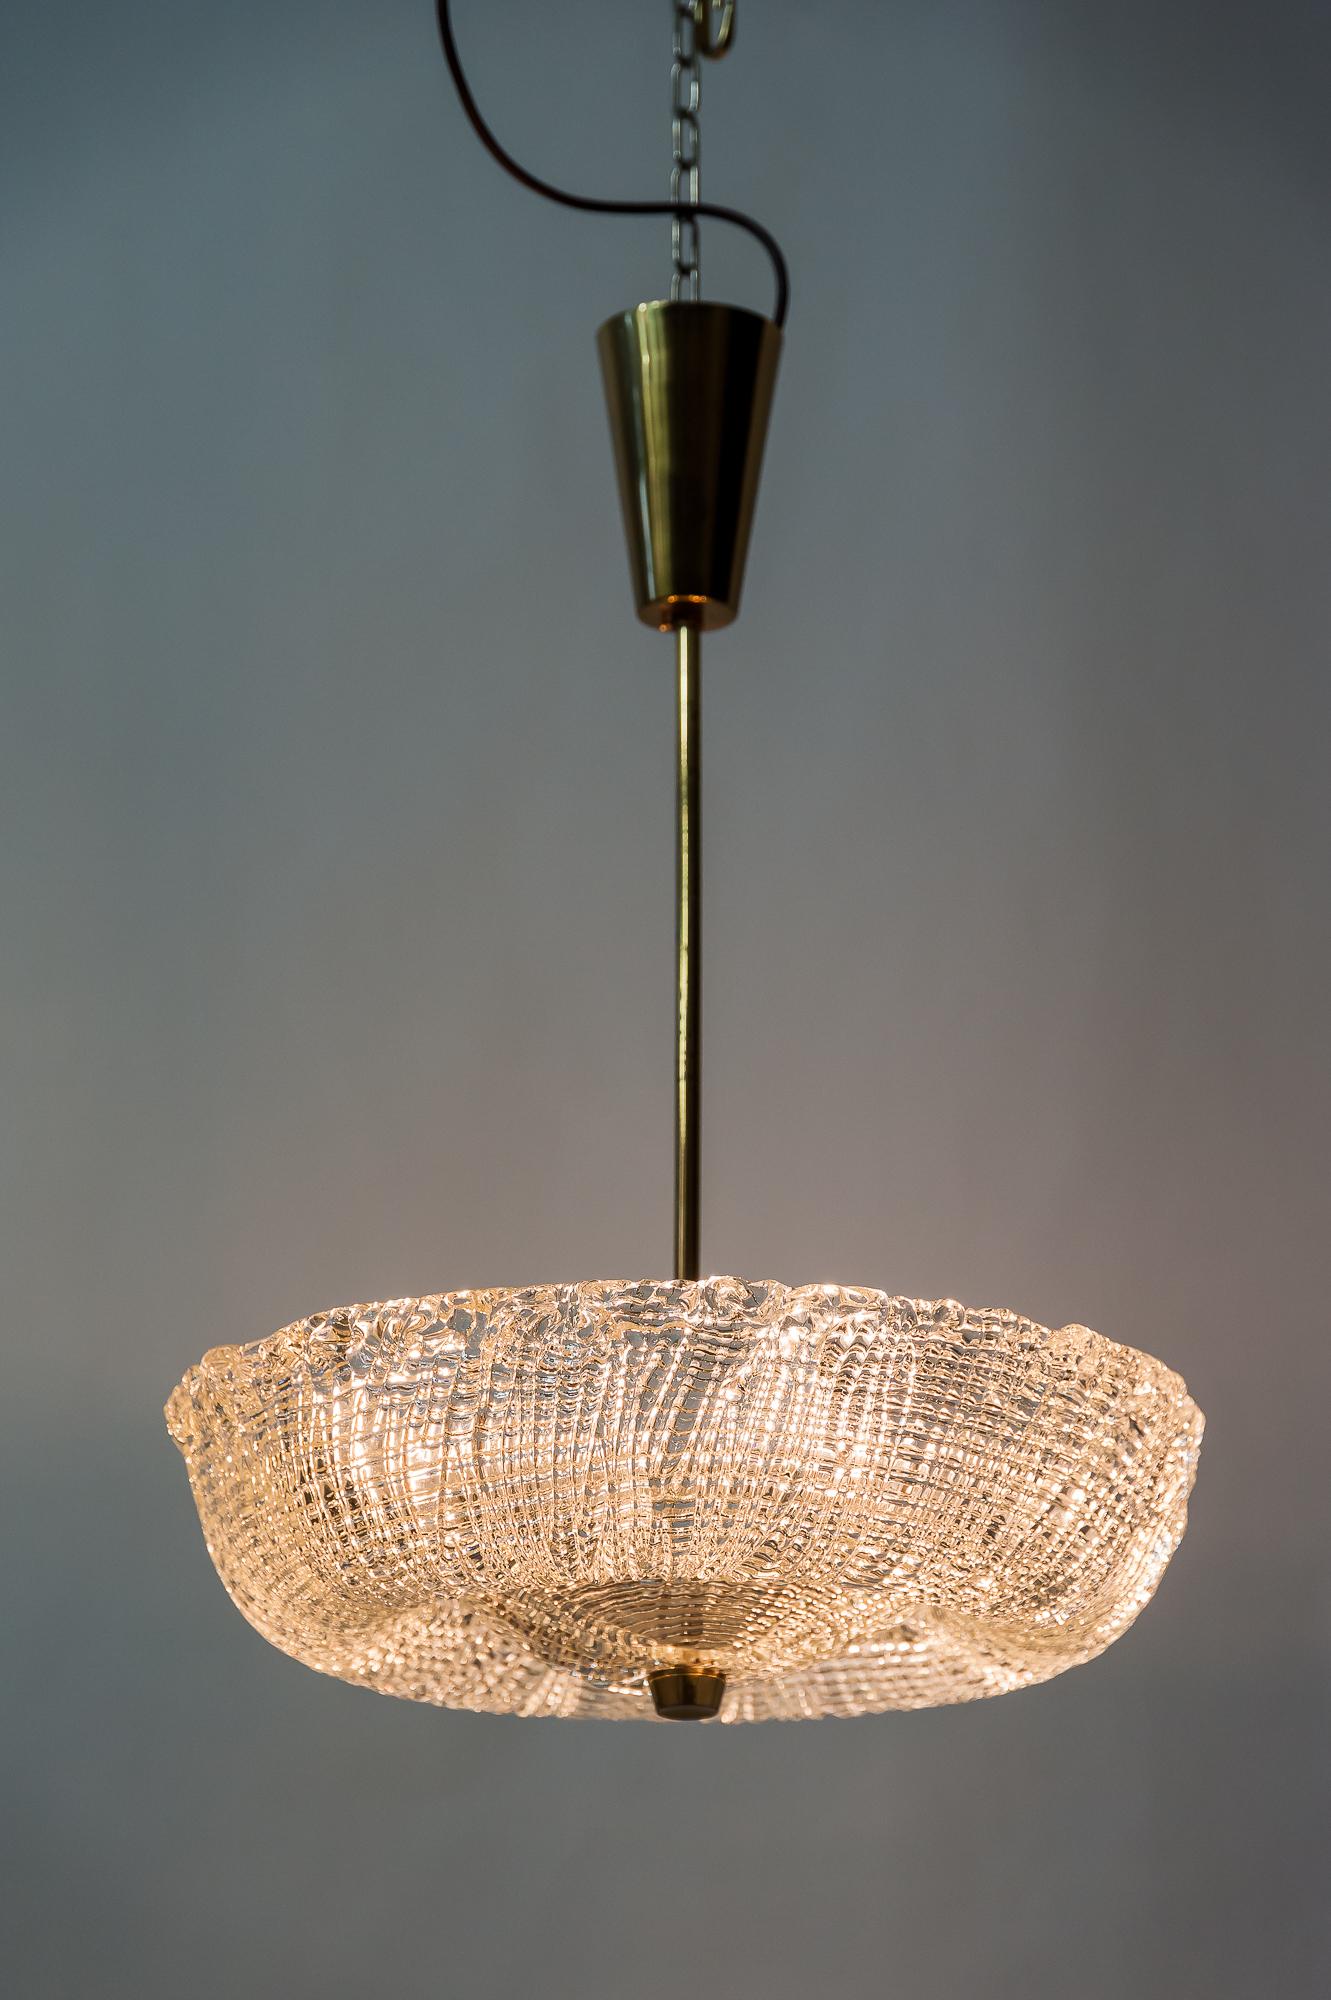 Kalmar chandeliers, brass and glass, 1960s.
Textured glass and brass ceiling lights by J. T. Kalmar, Vienna, manufactured in midcentury, circa 1960. 

Original condition.